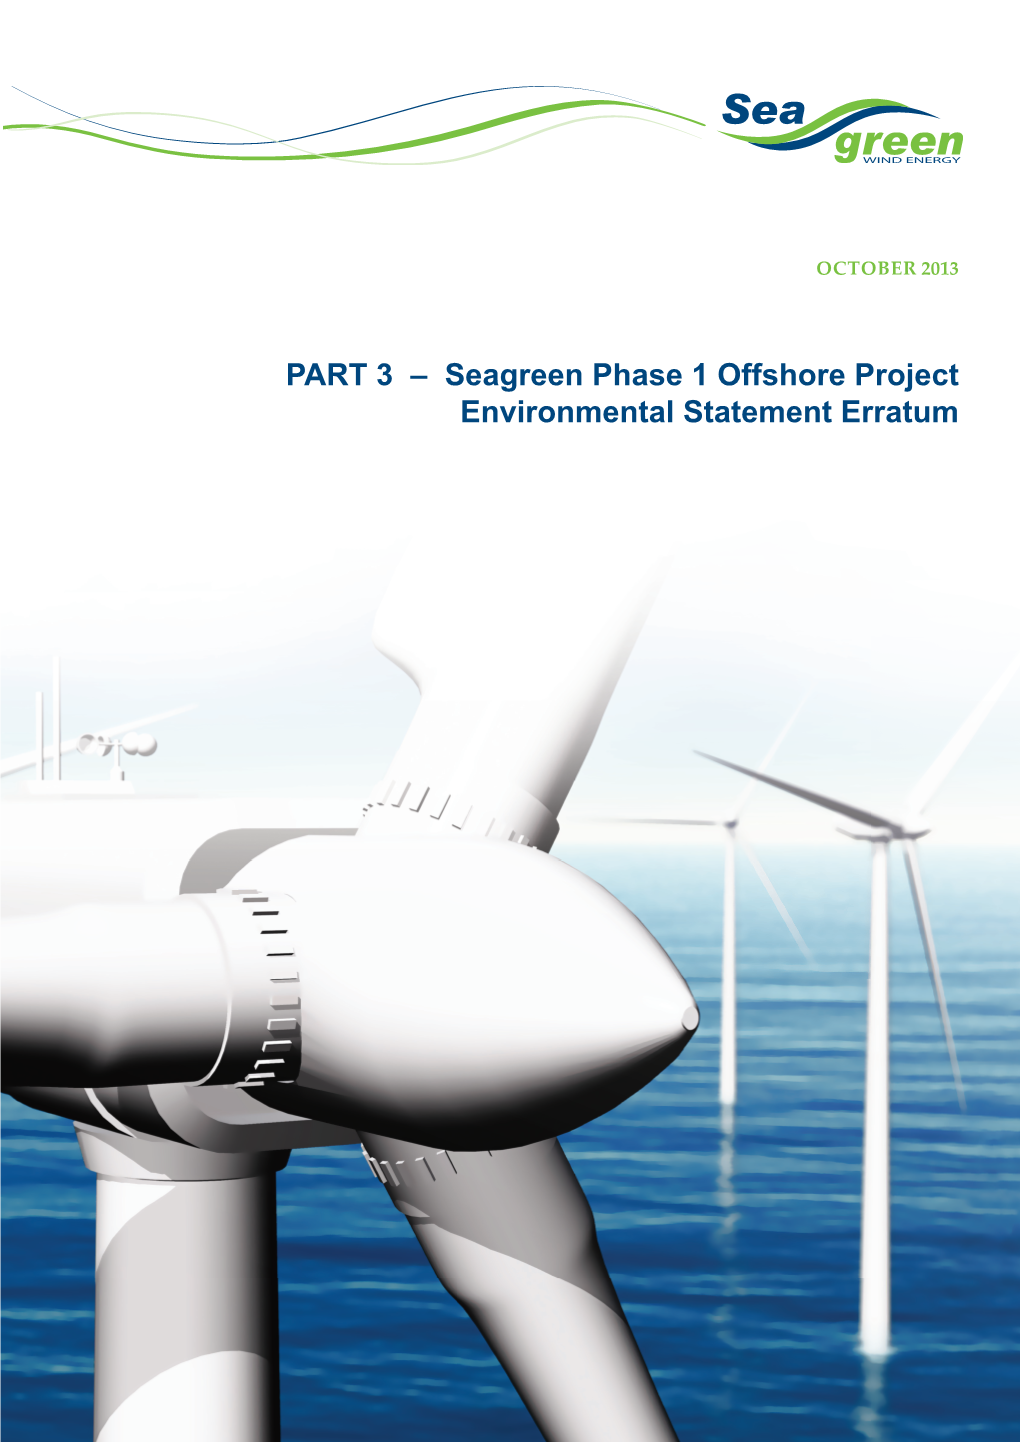 PART 3 – Seagreen Phase 1 Offshore Project Environmental Statement Erratum